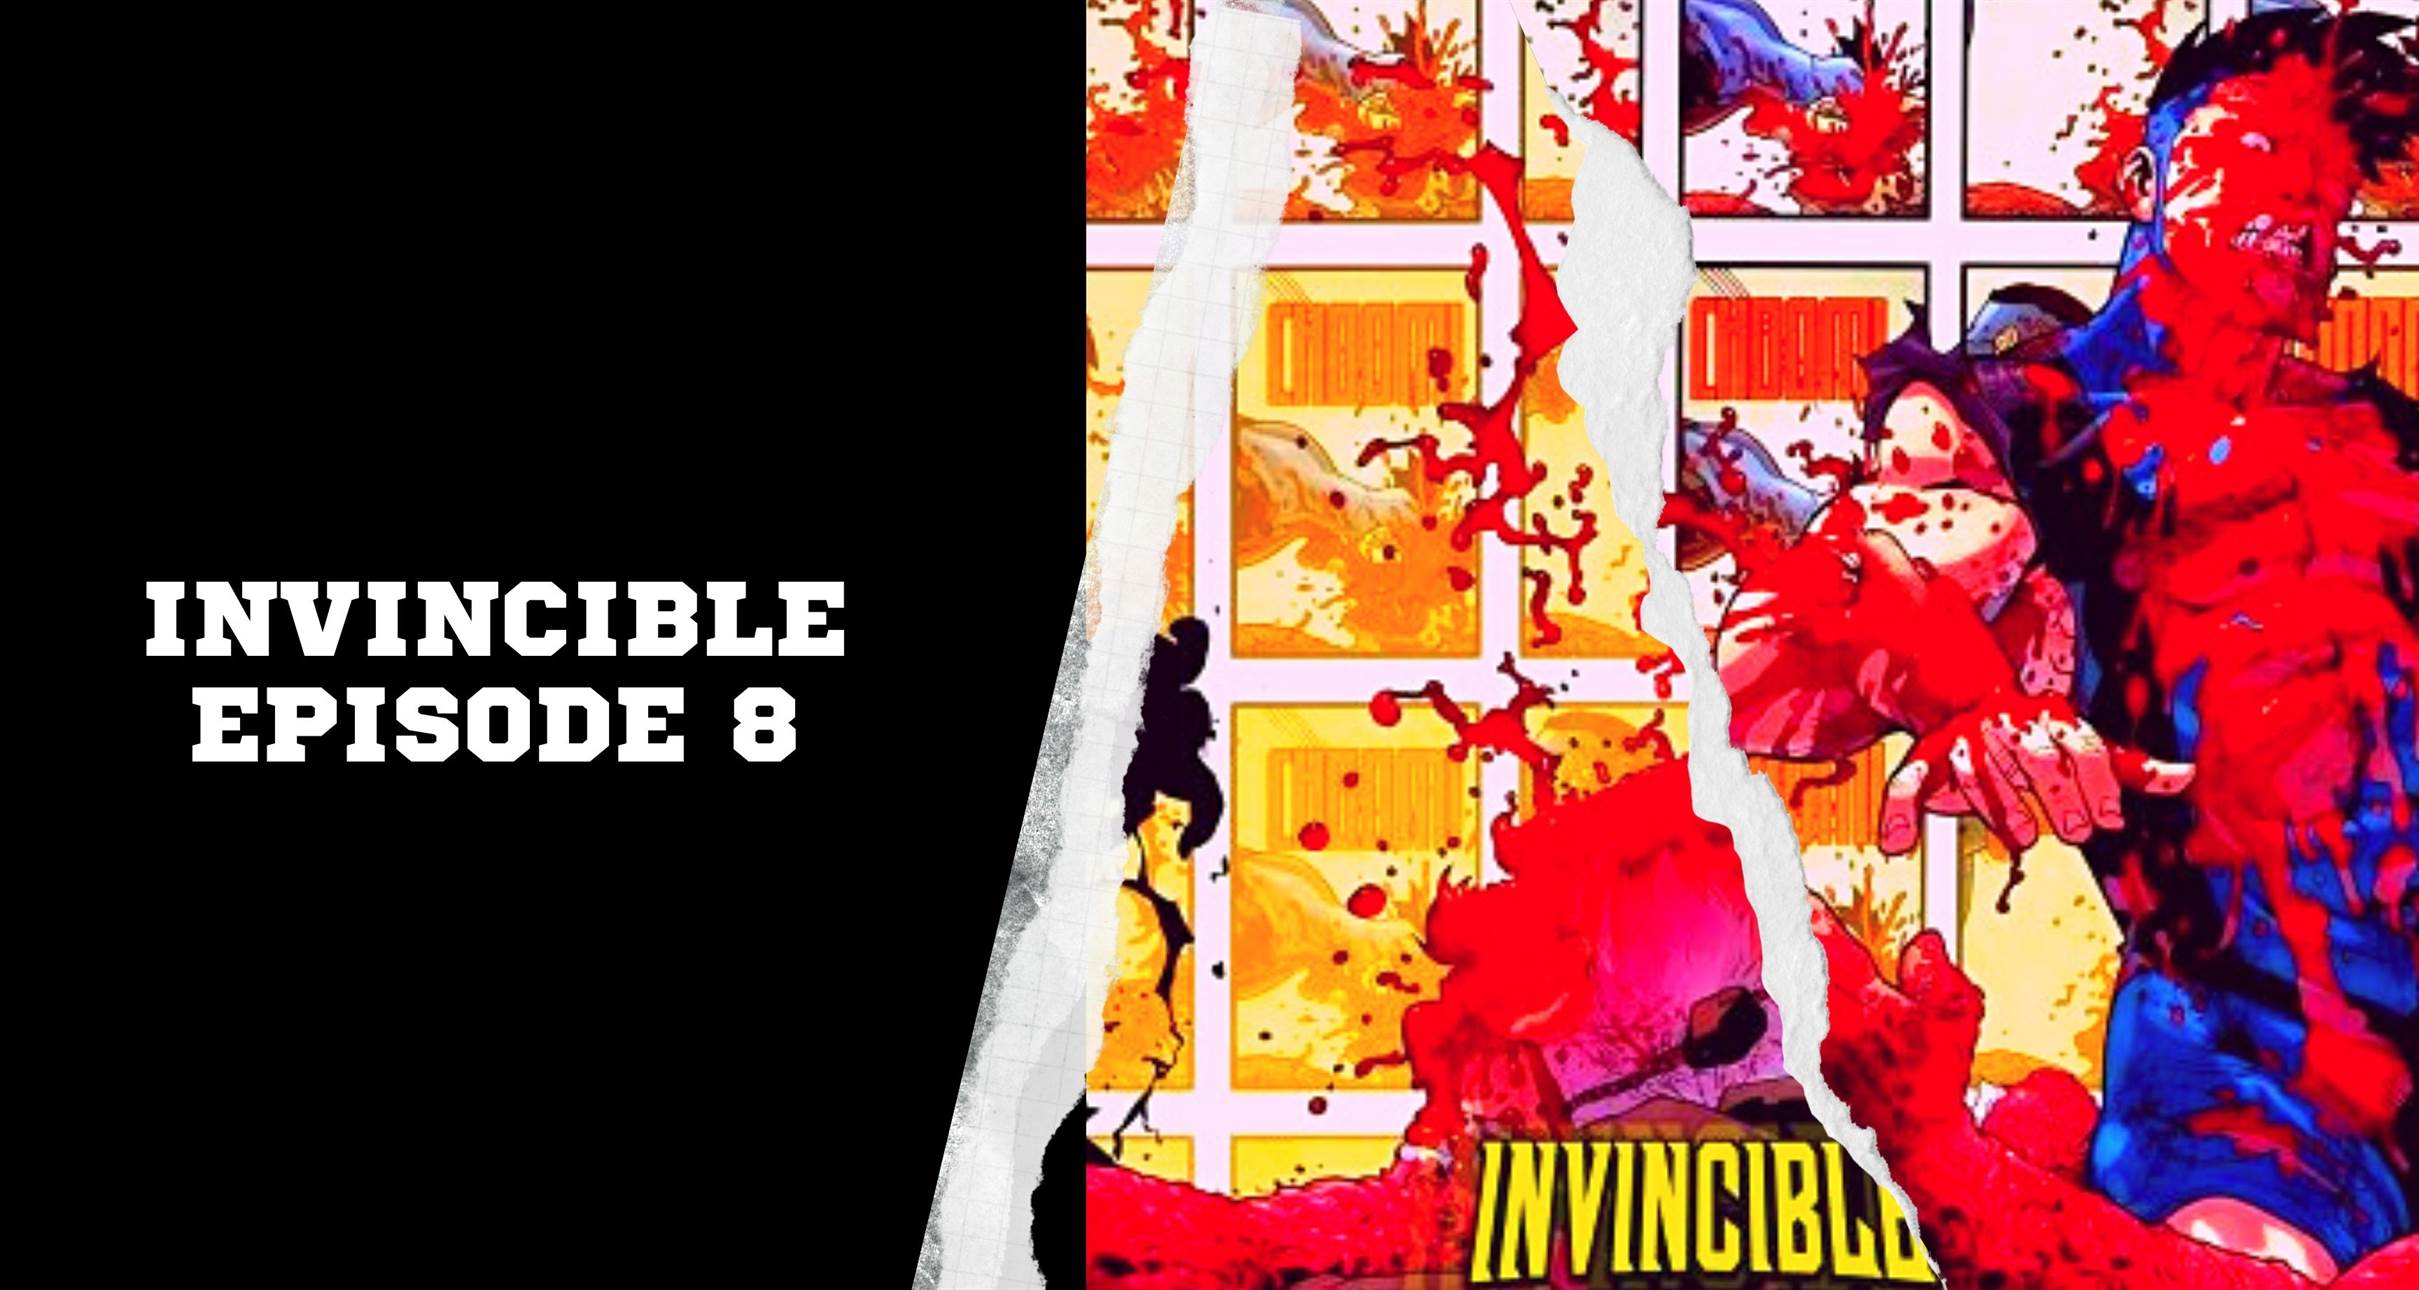 Invincible episode 8